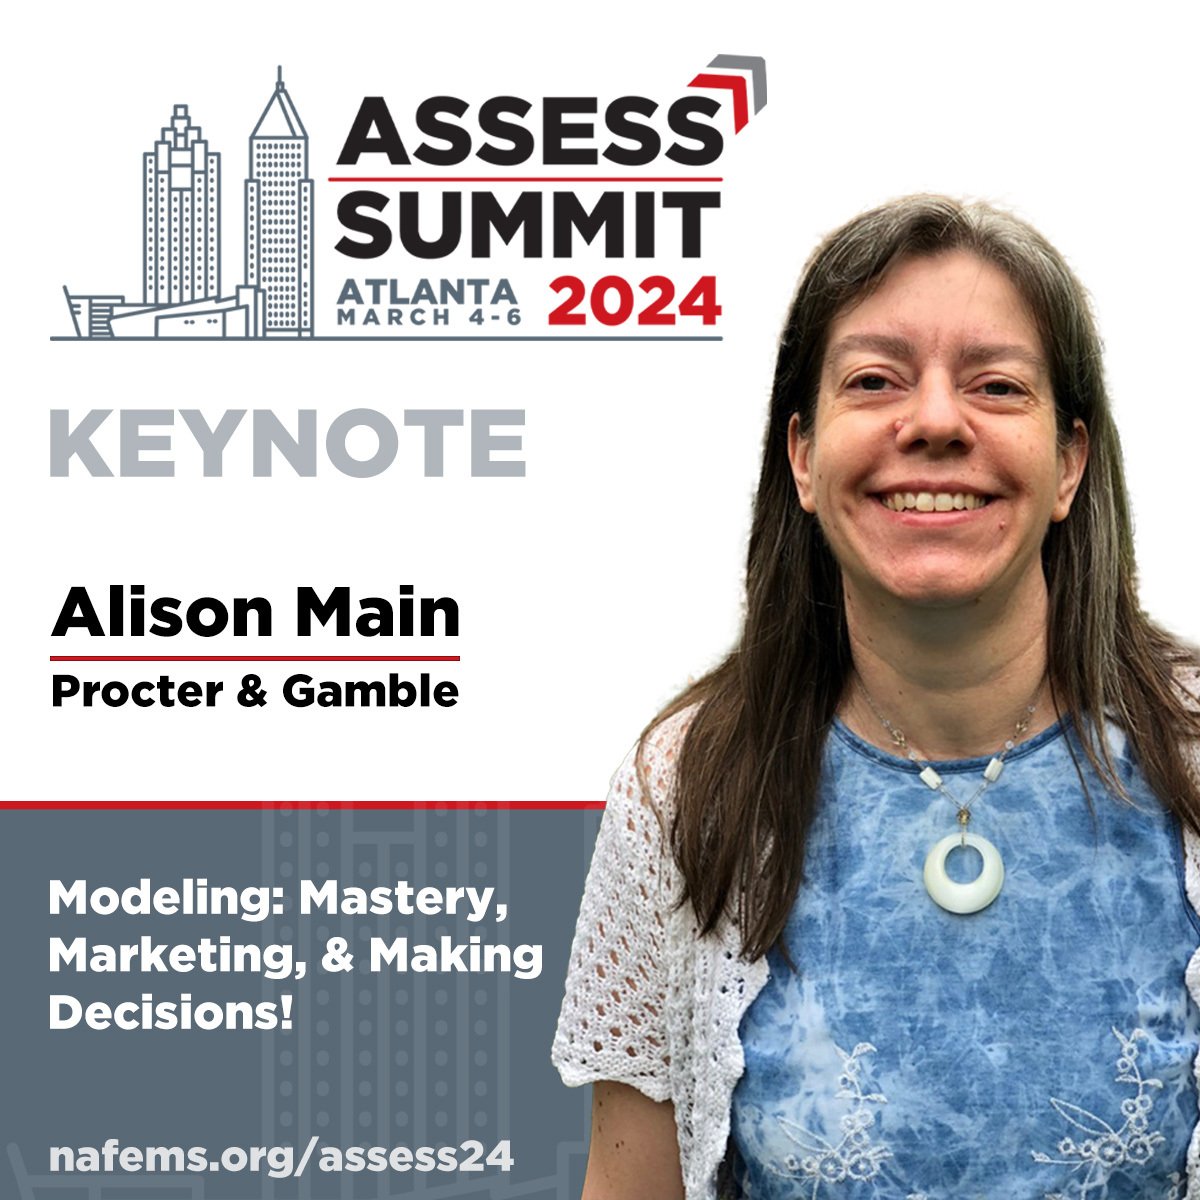 ASSESS Summit 2024 Keynote - Alison Main from Procter & Gamble